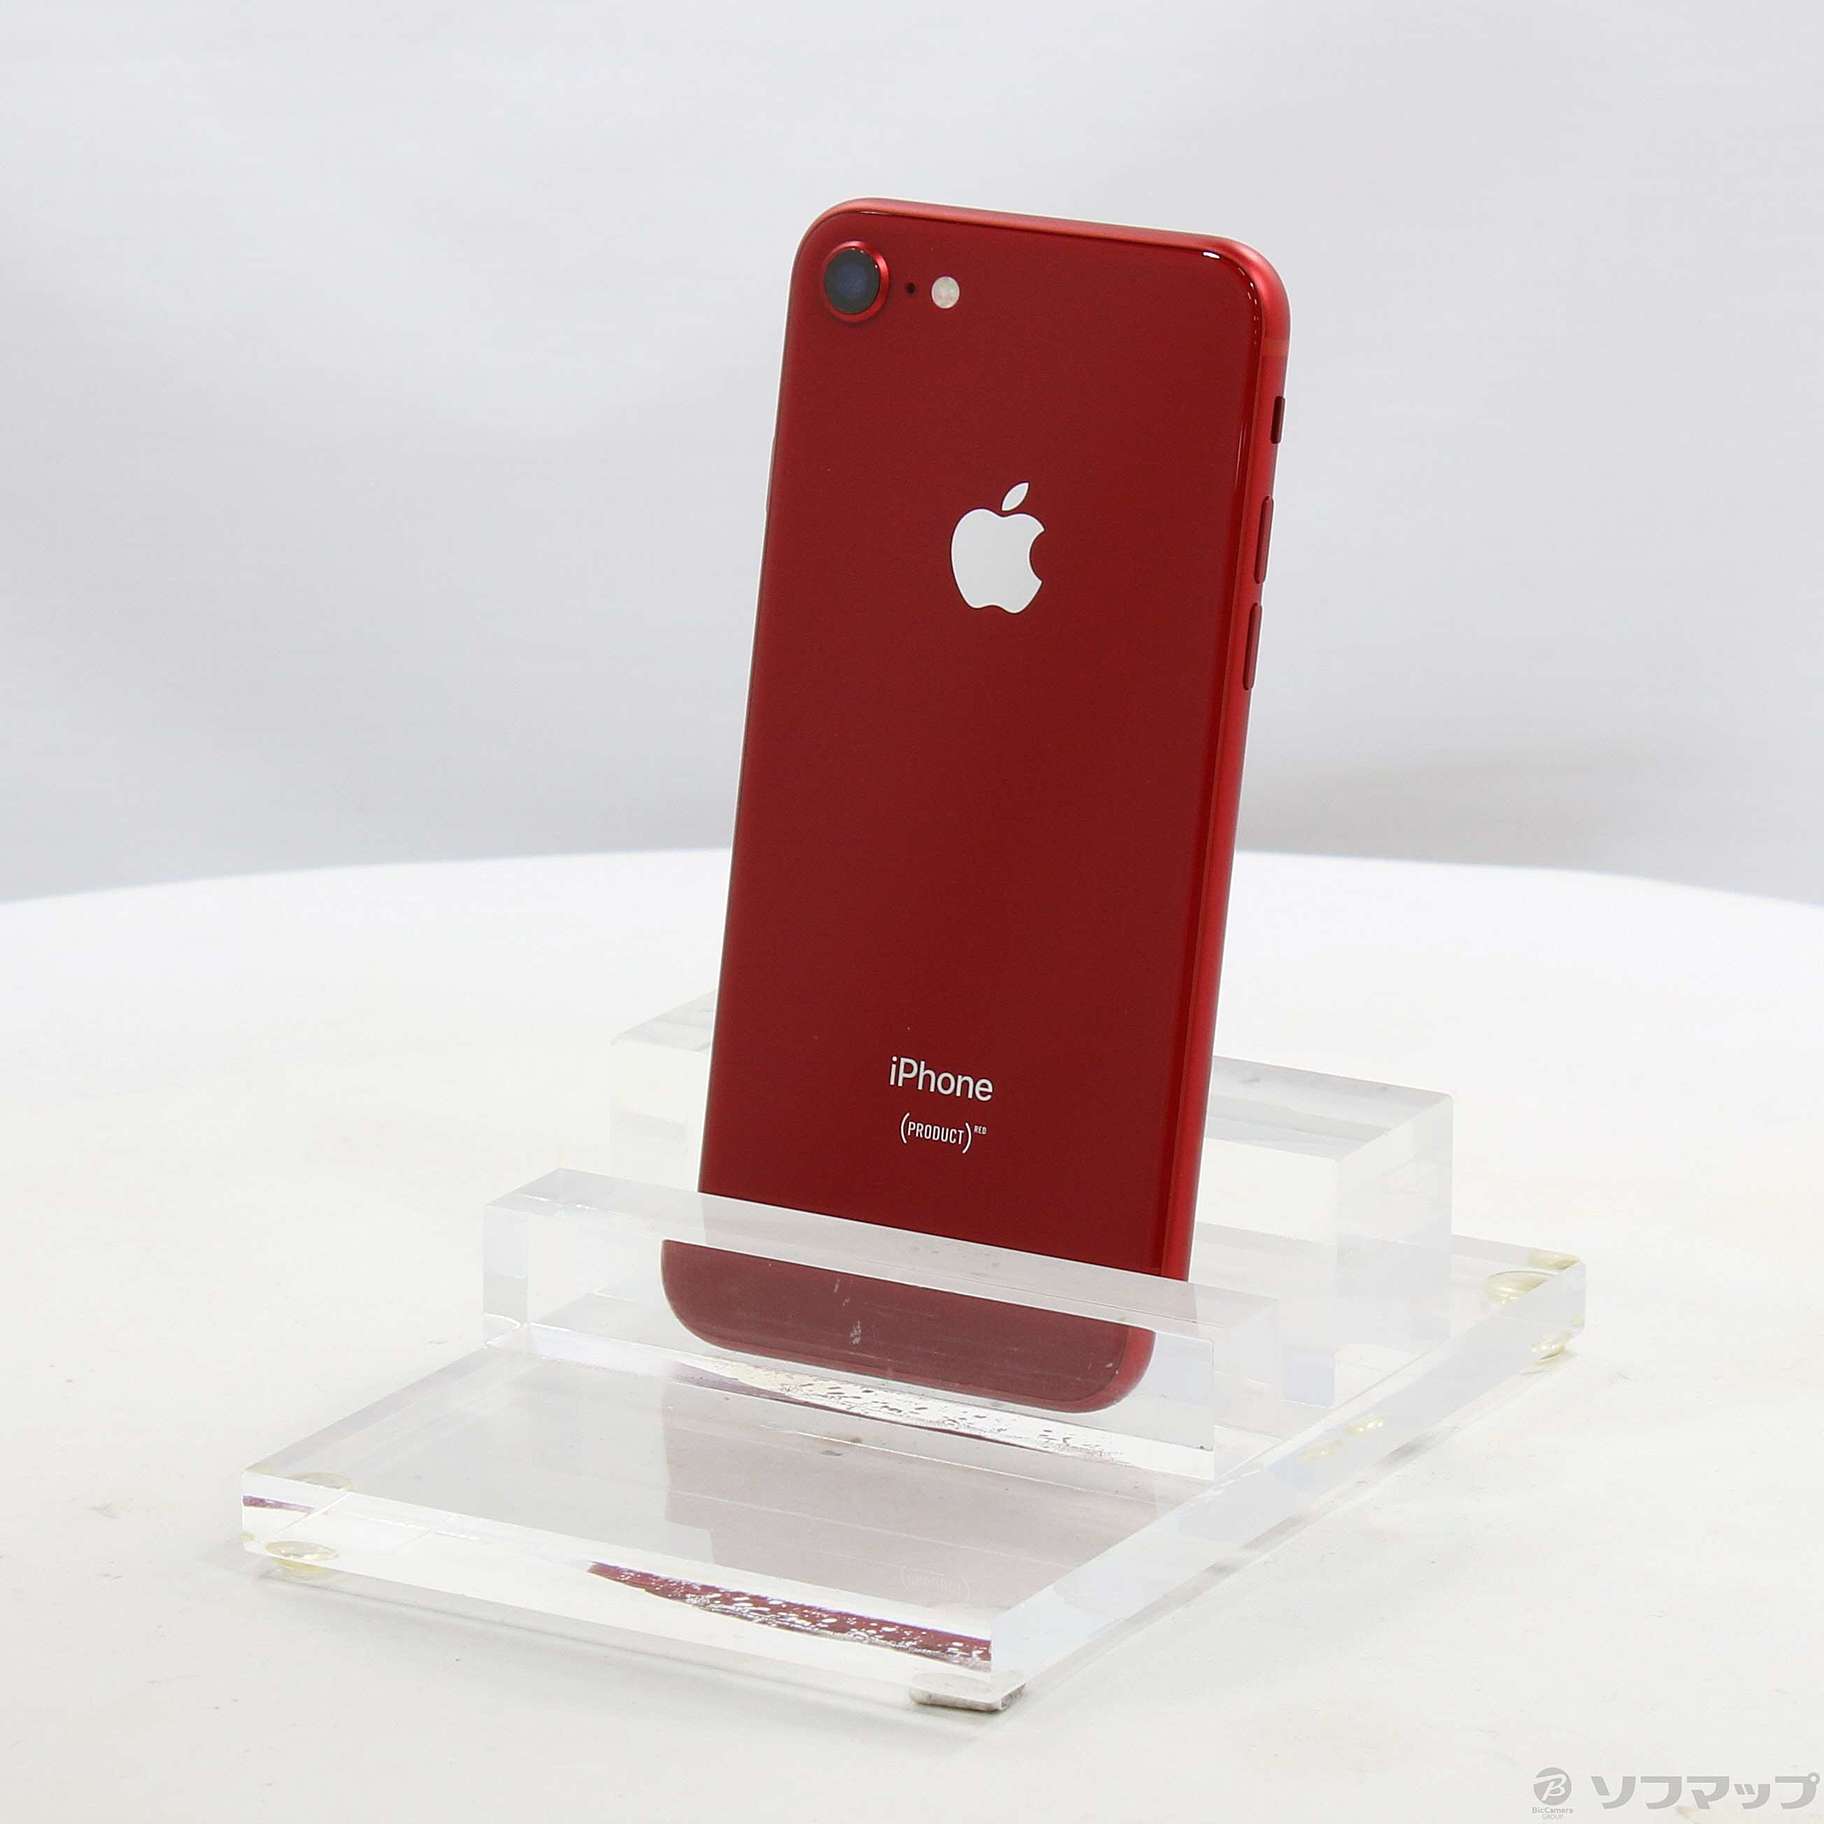 iPhone8 RED 64GB SIMフリースマートフォン本体